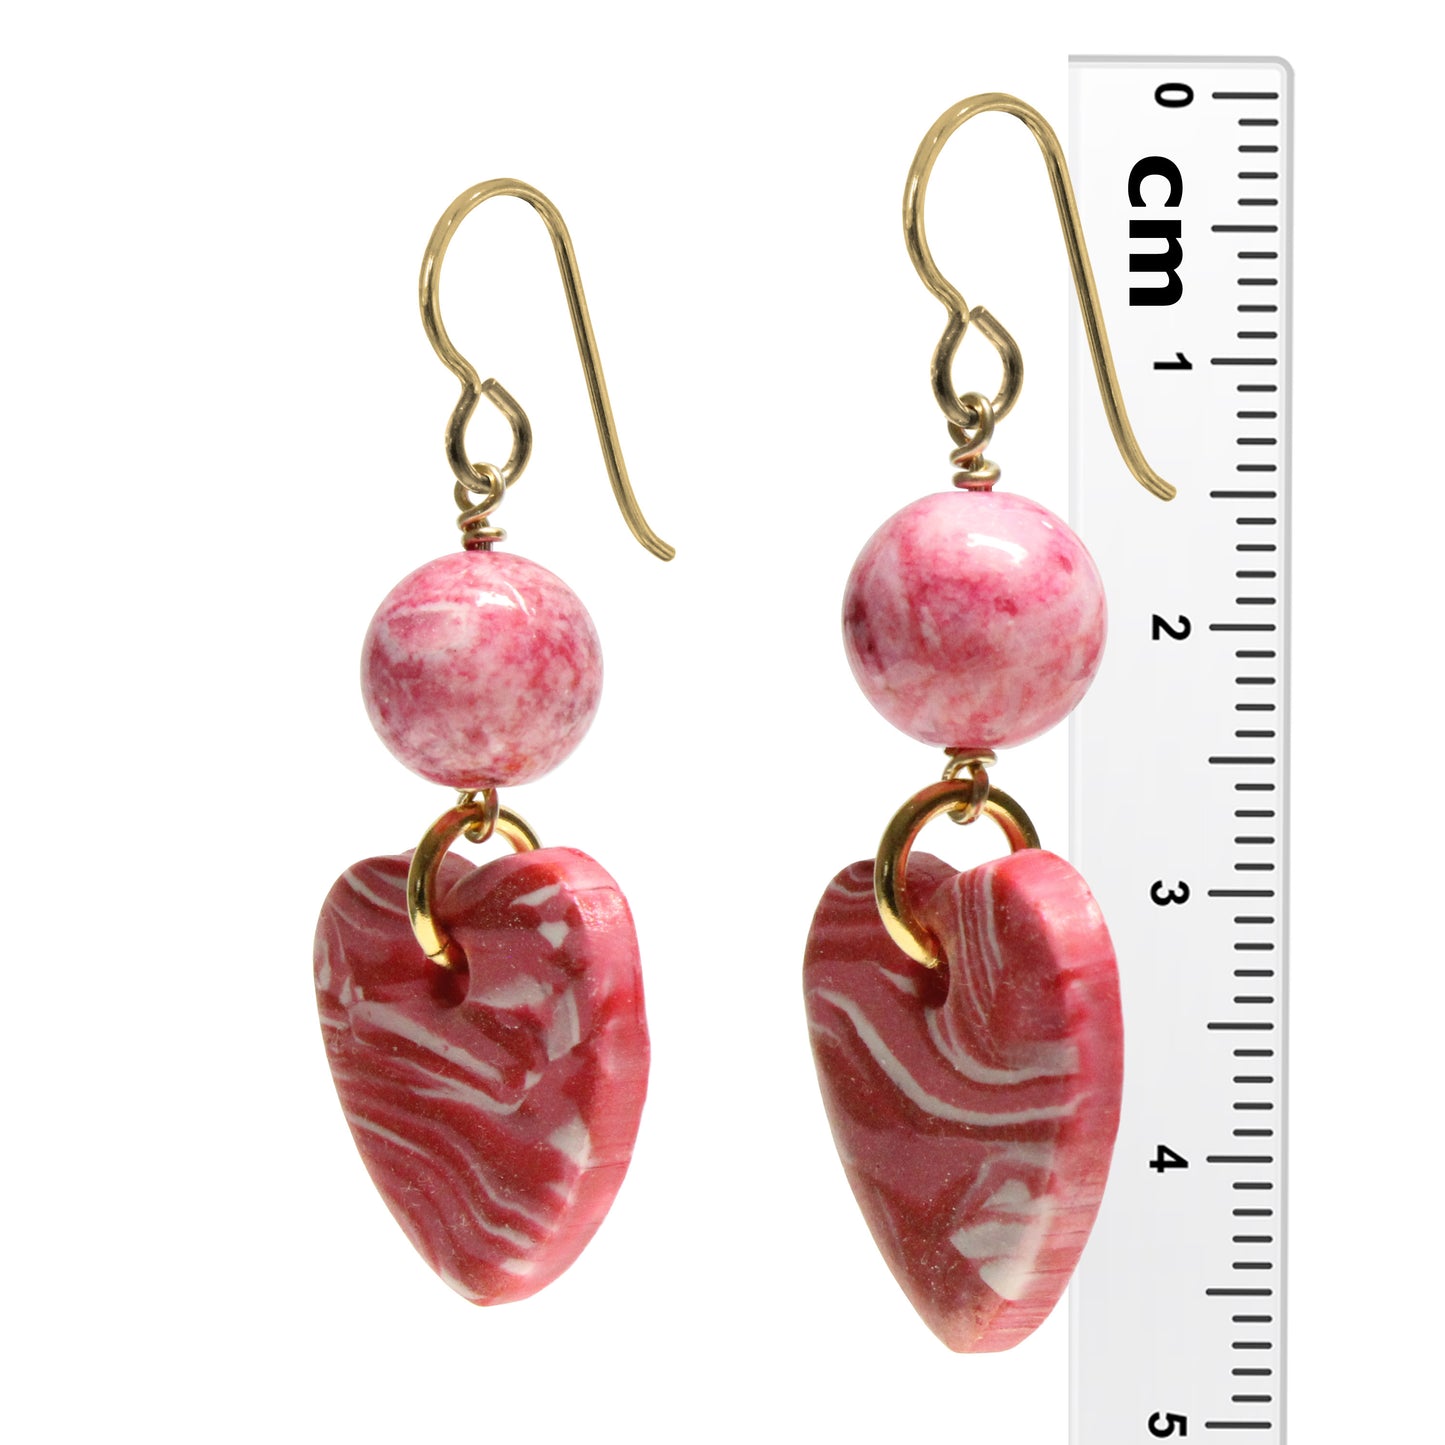 Heart Charm Earrings / 48mm length / gold filled earwires